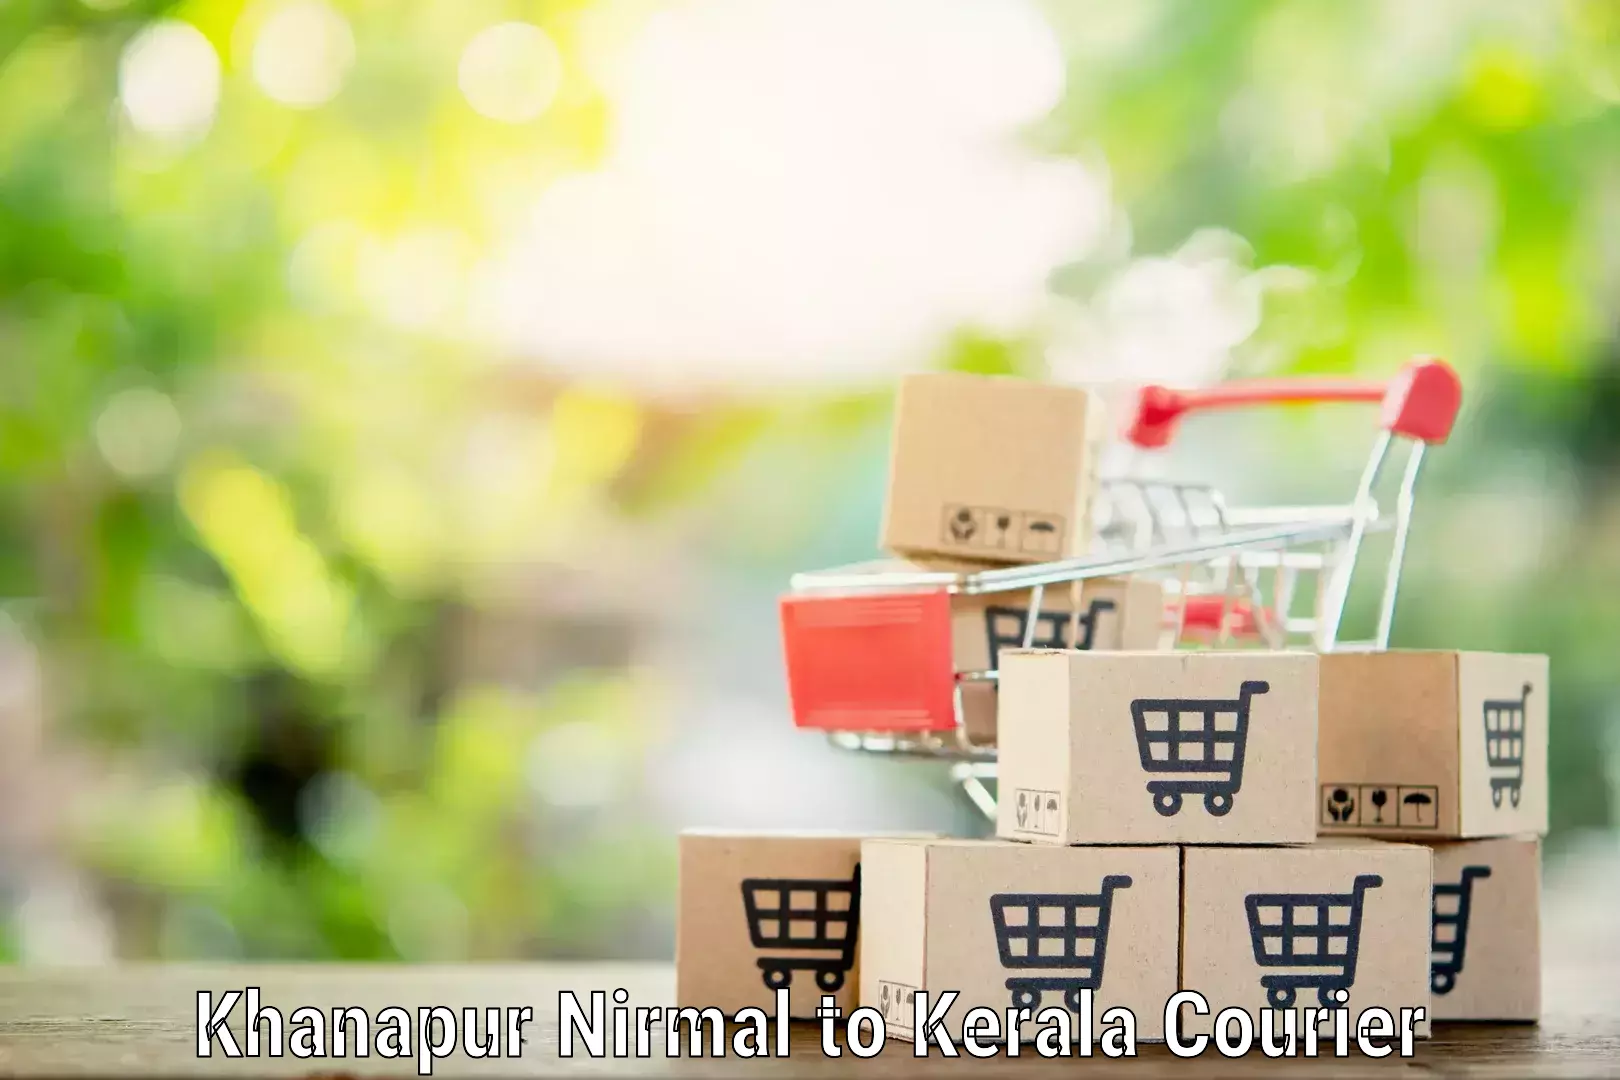 Moving and packing experts Khanapur Nirmal to Kollam